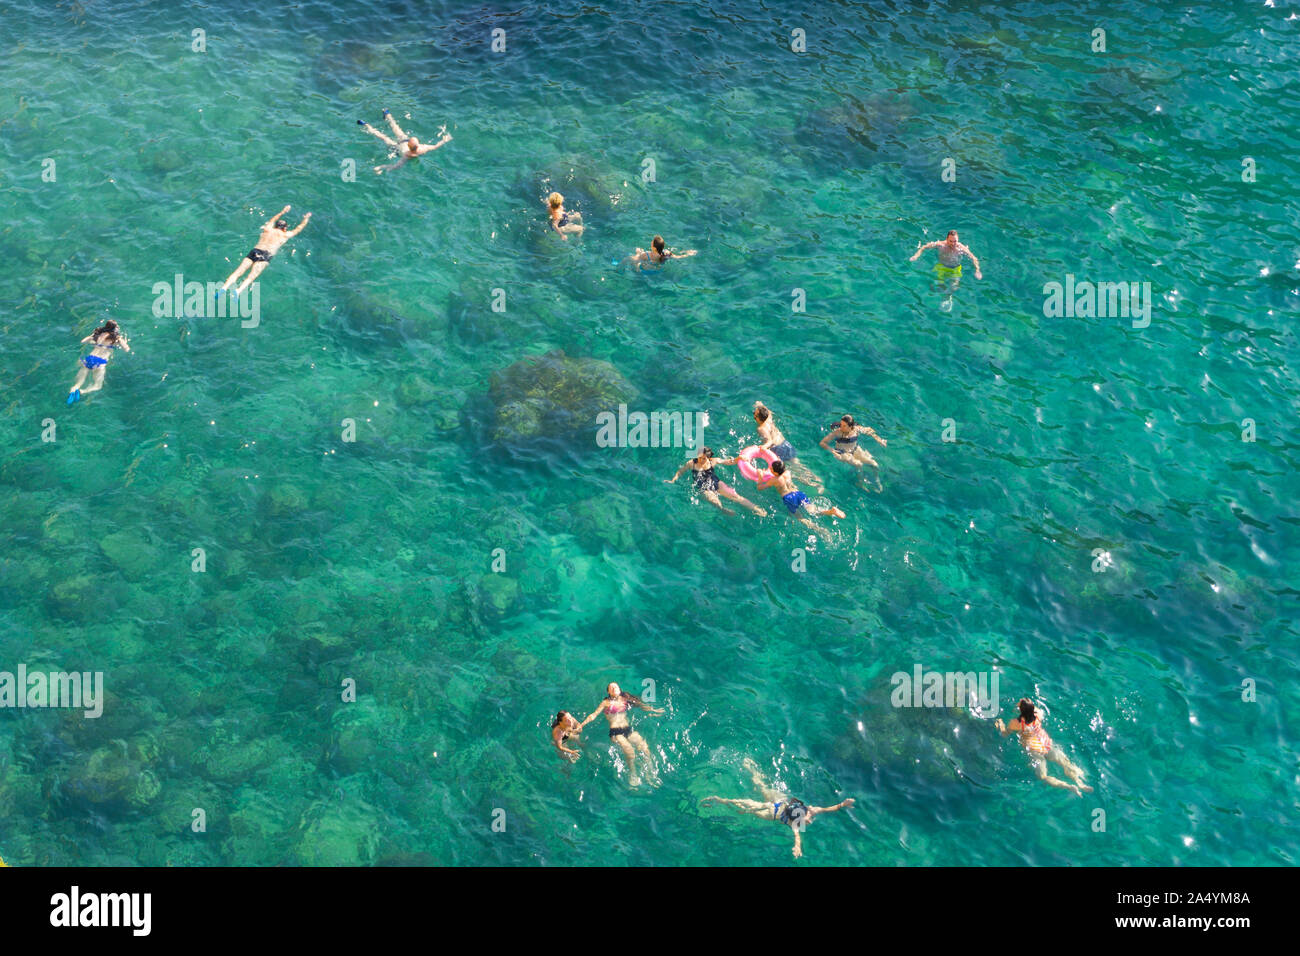 Italia, Apulia, Polignano a Mare, gente nadando Foto de stock